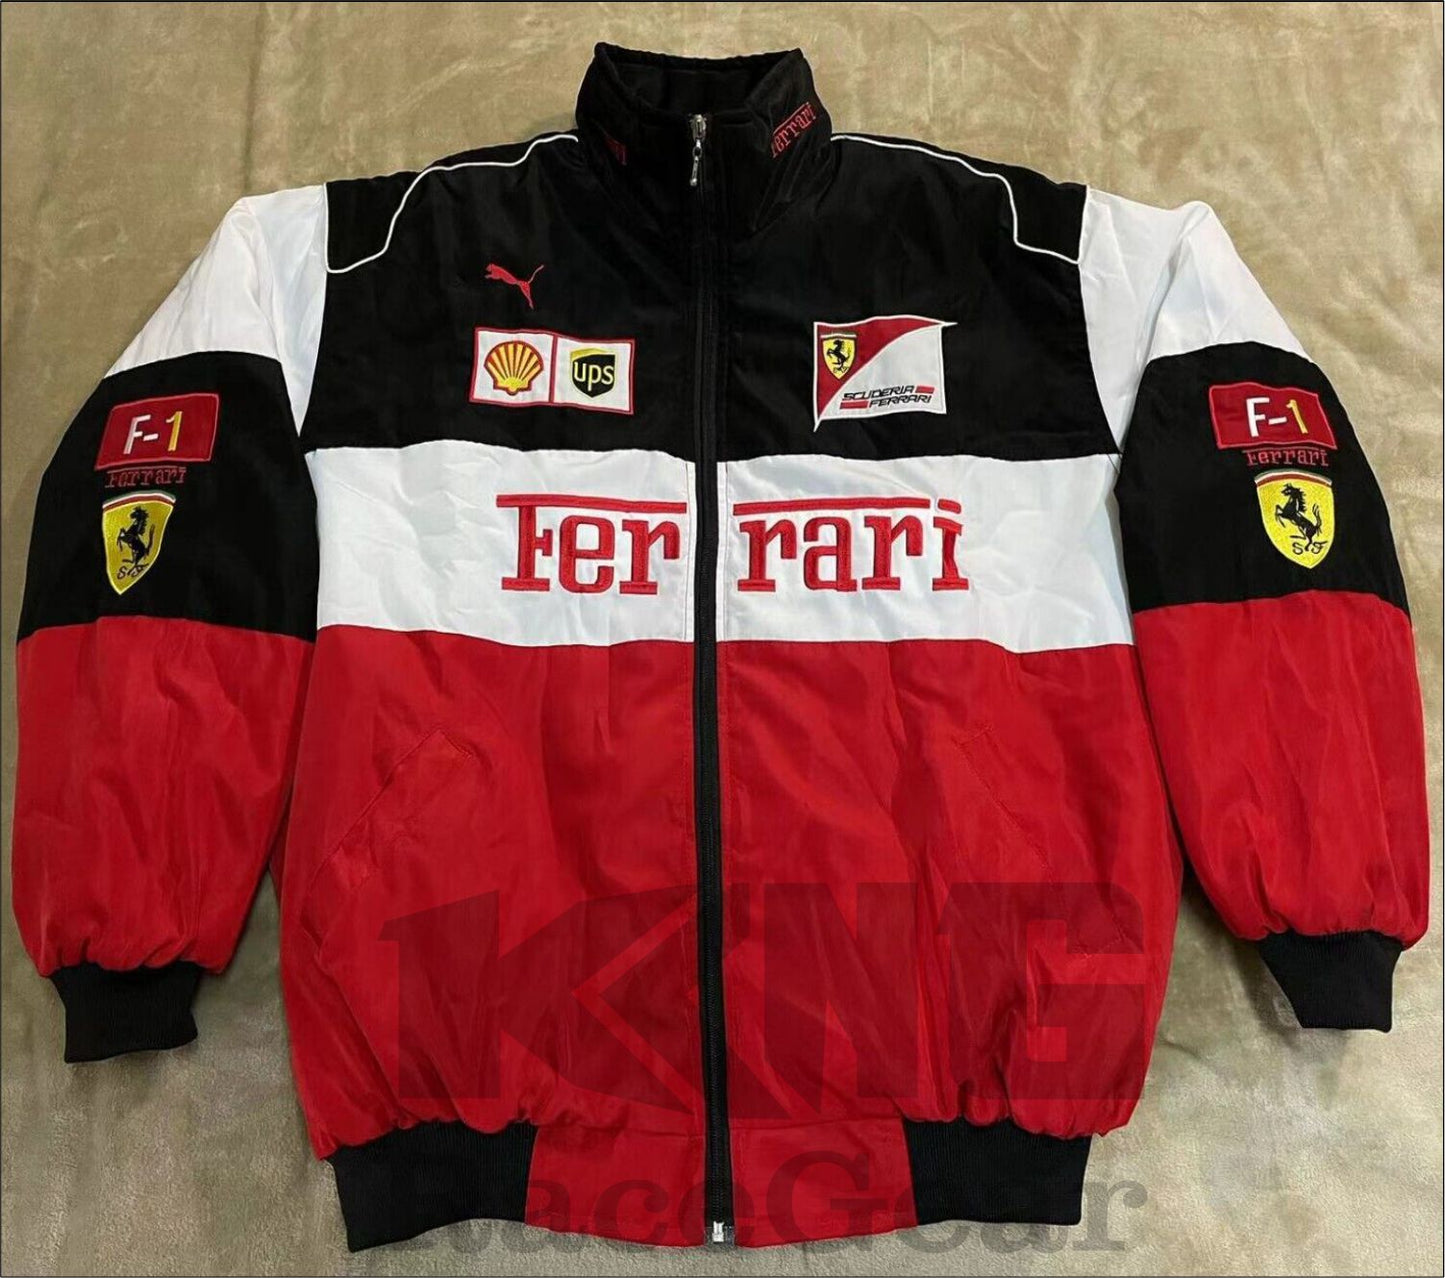 F1 Vintage Scuderia Ferrari Jacket White™